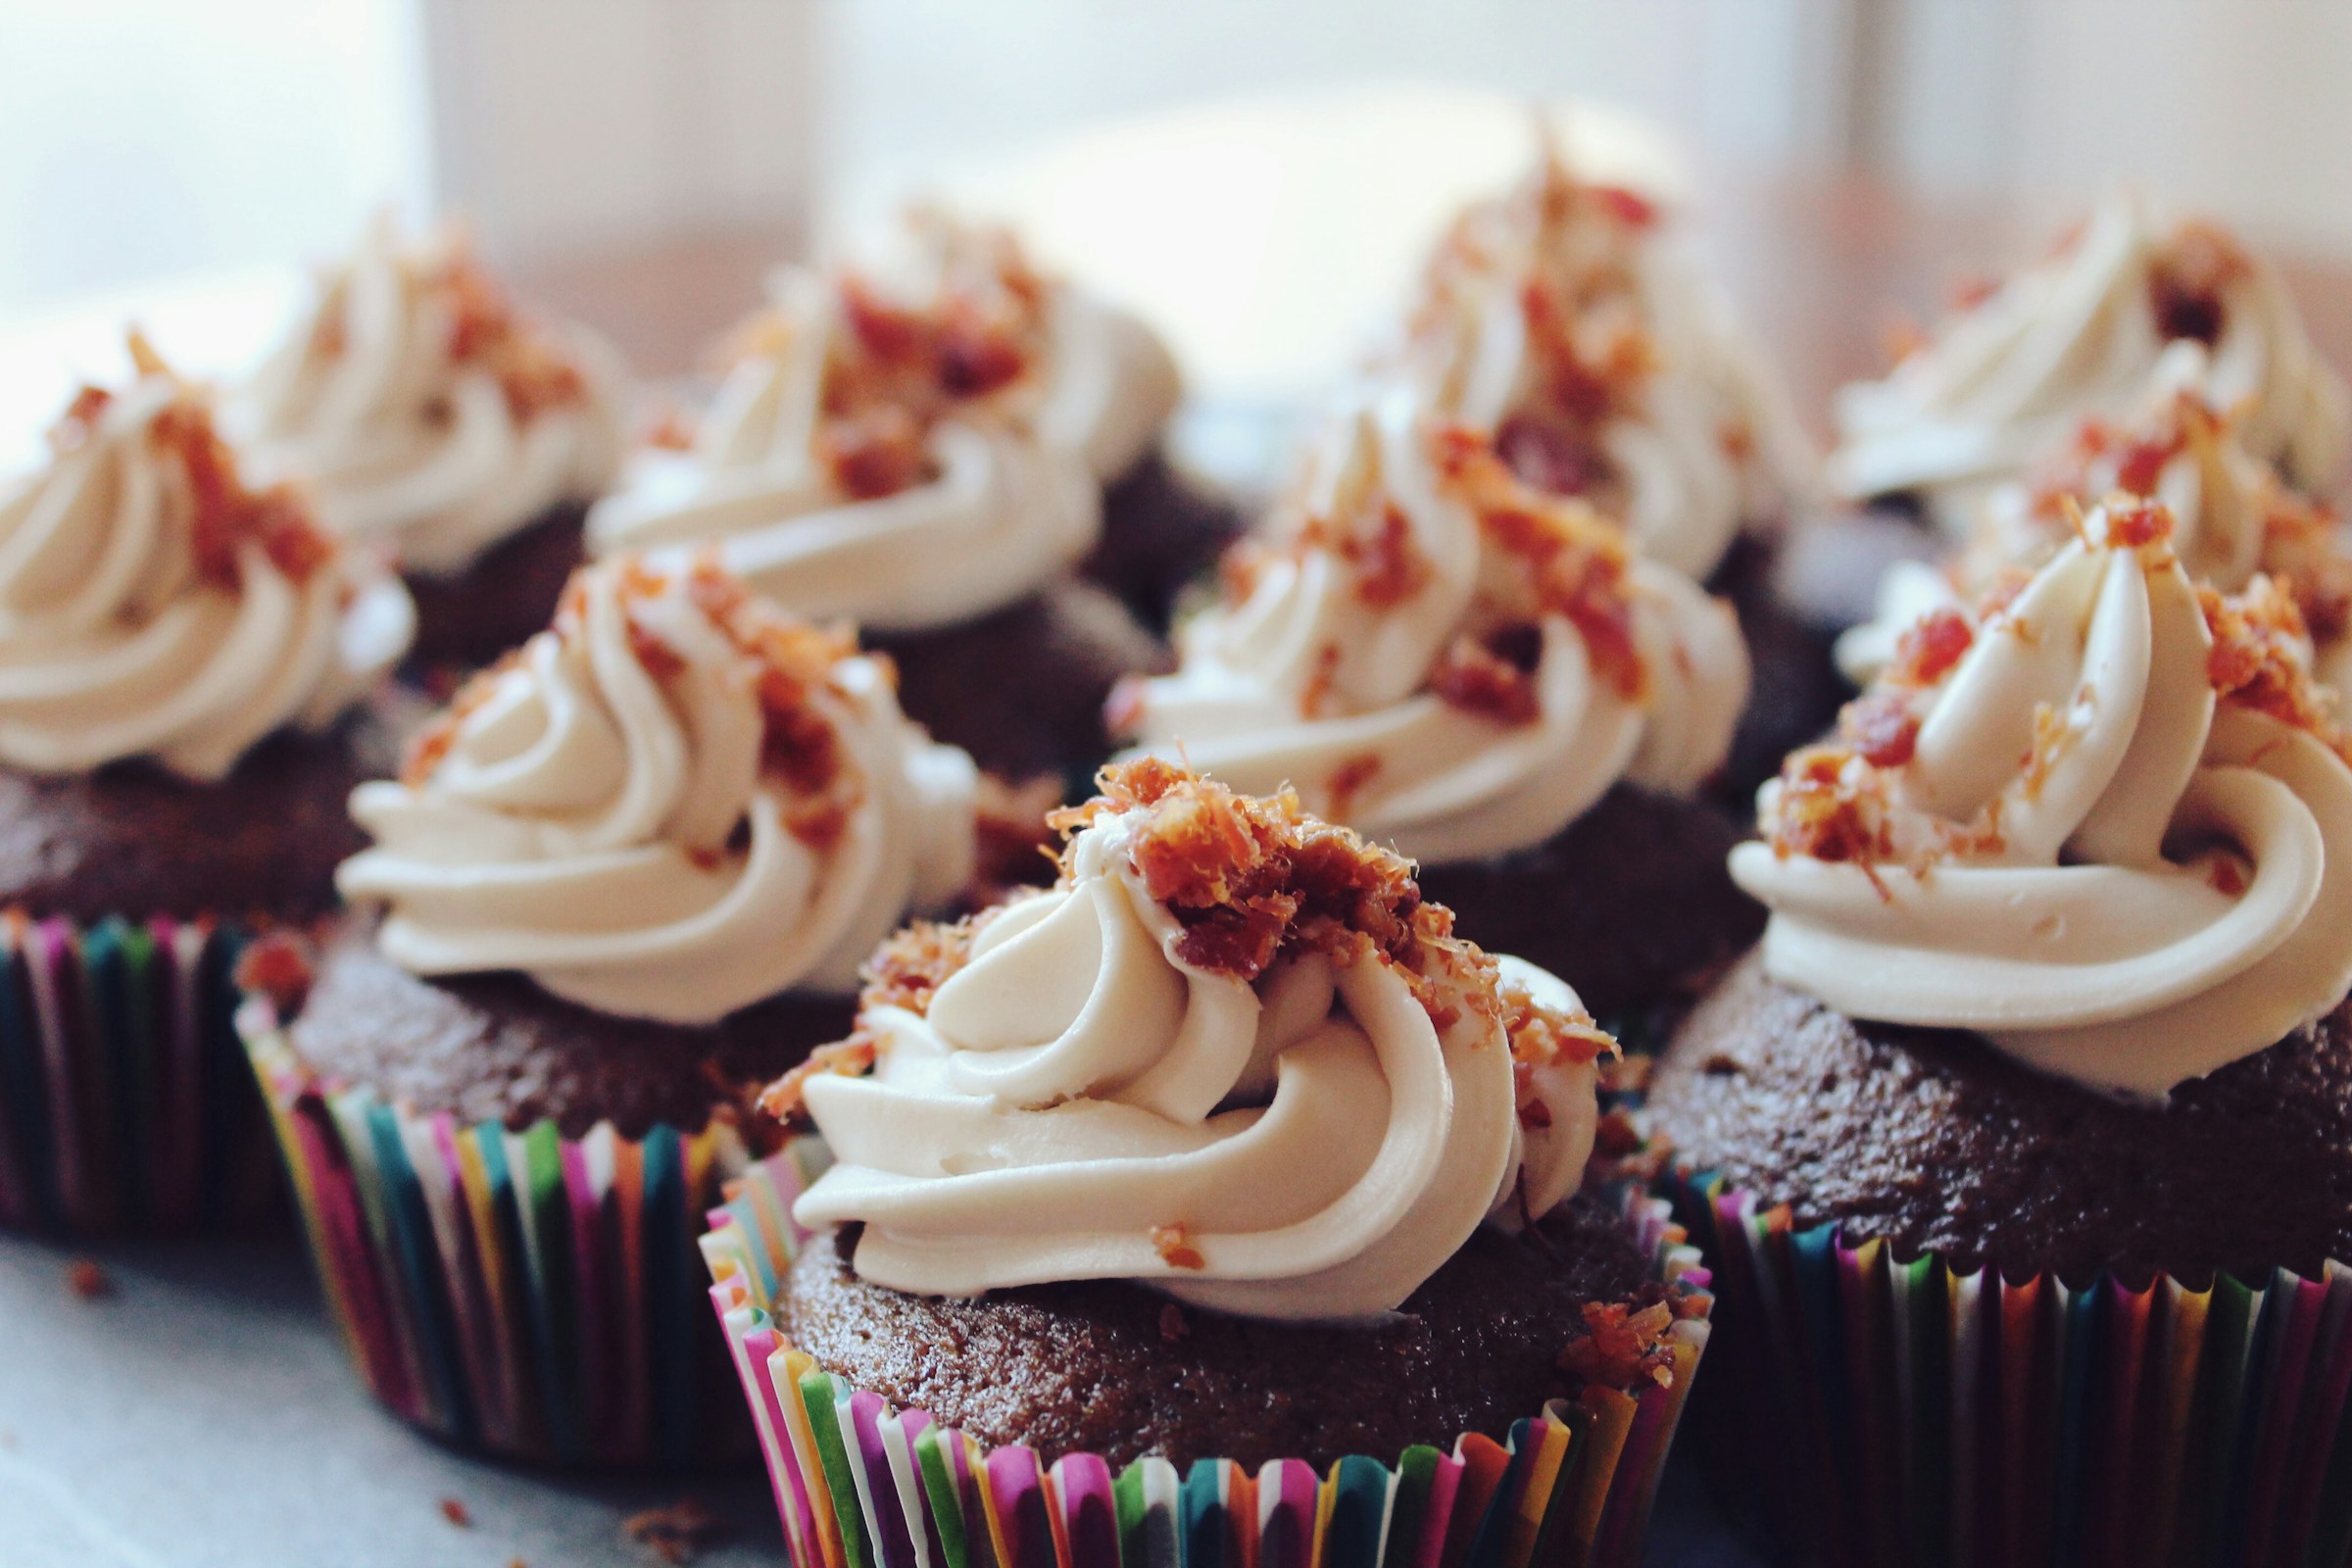 Chocolate cupcakes | Source: Unsplash